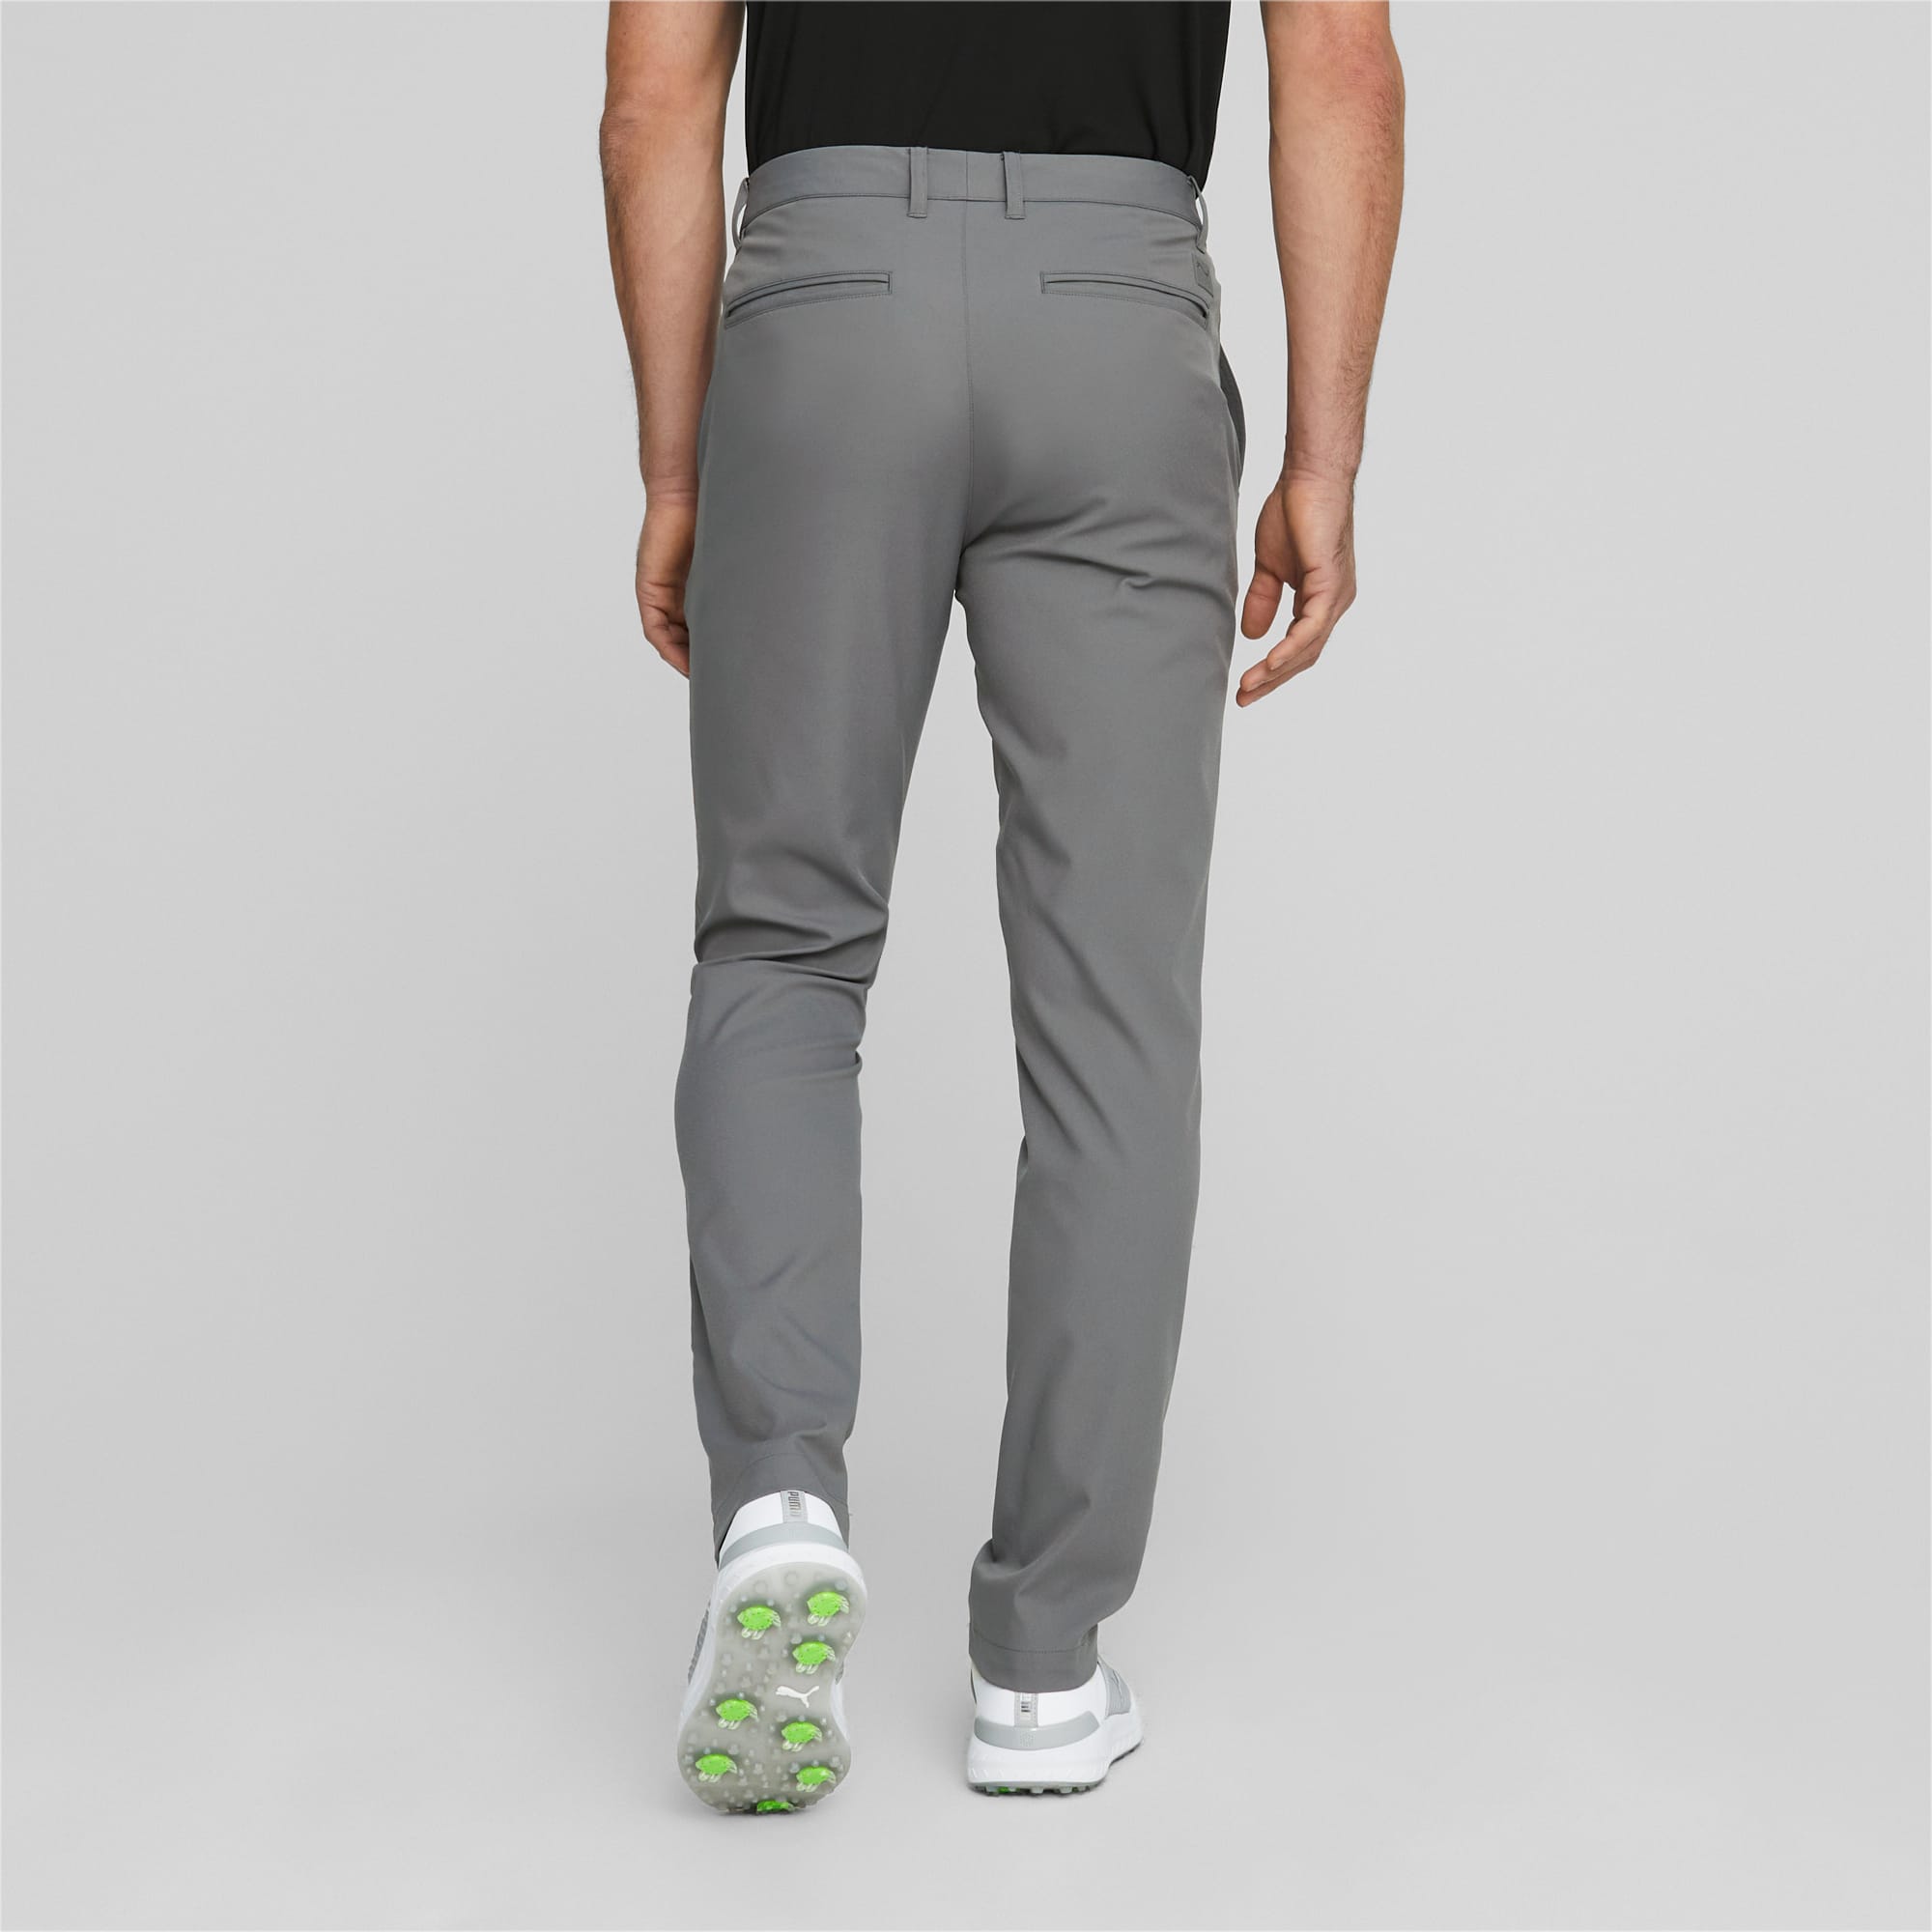 PUMA Dealer Tailored Golf Pants Men, Slate Sky, Size 35/30, Clothing